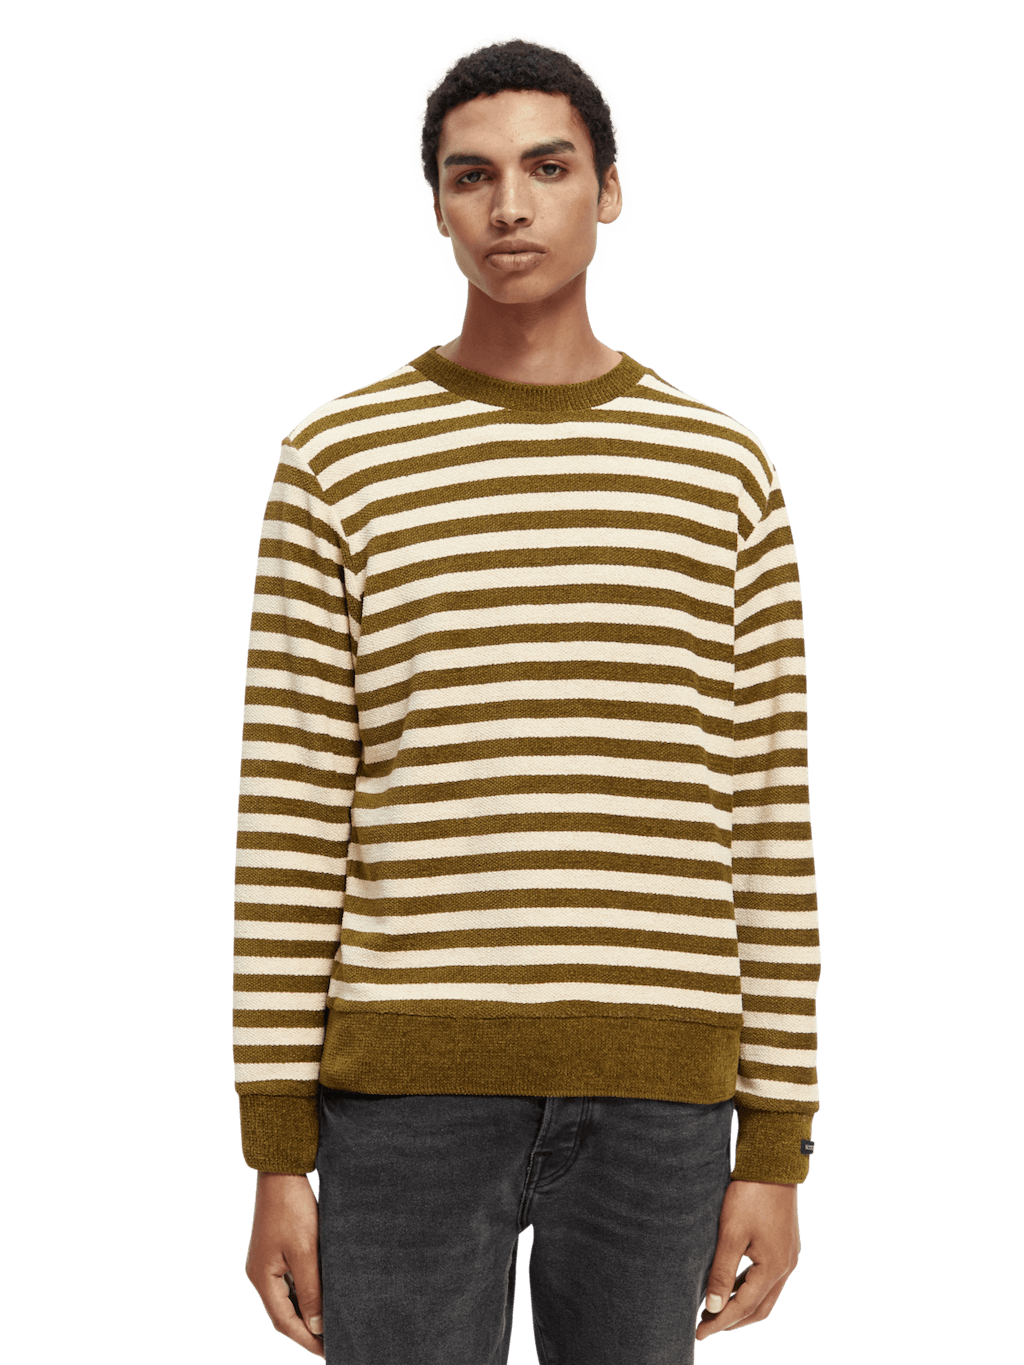 Striped crewneck felpa sweatshirt